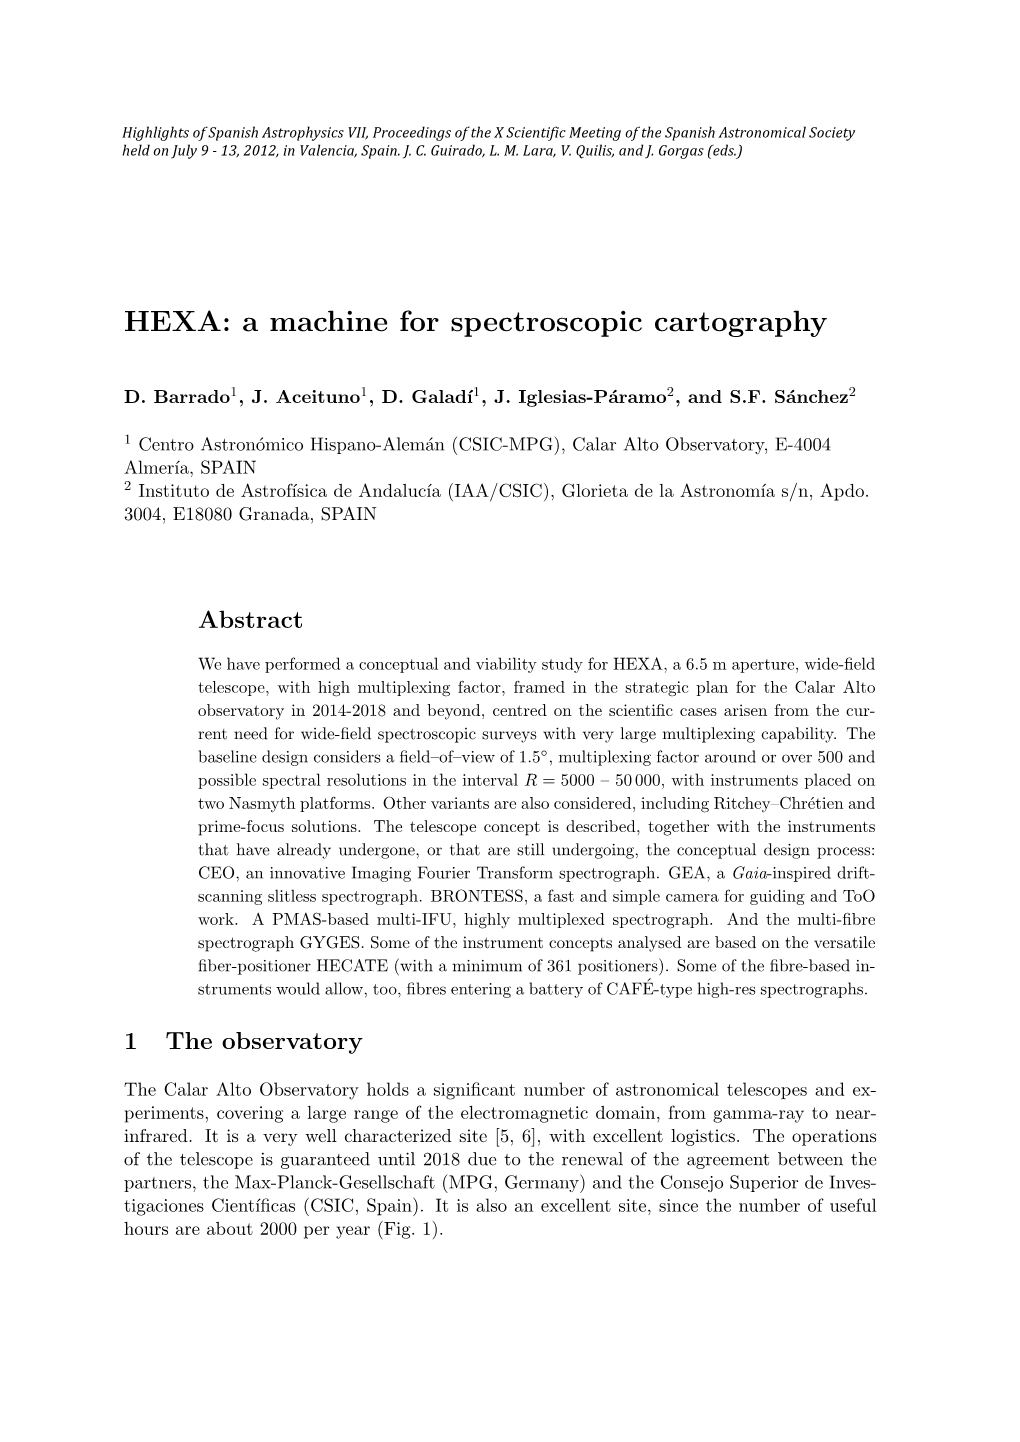 HEXA: a Machine for Spectroscopic Cartography